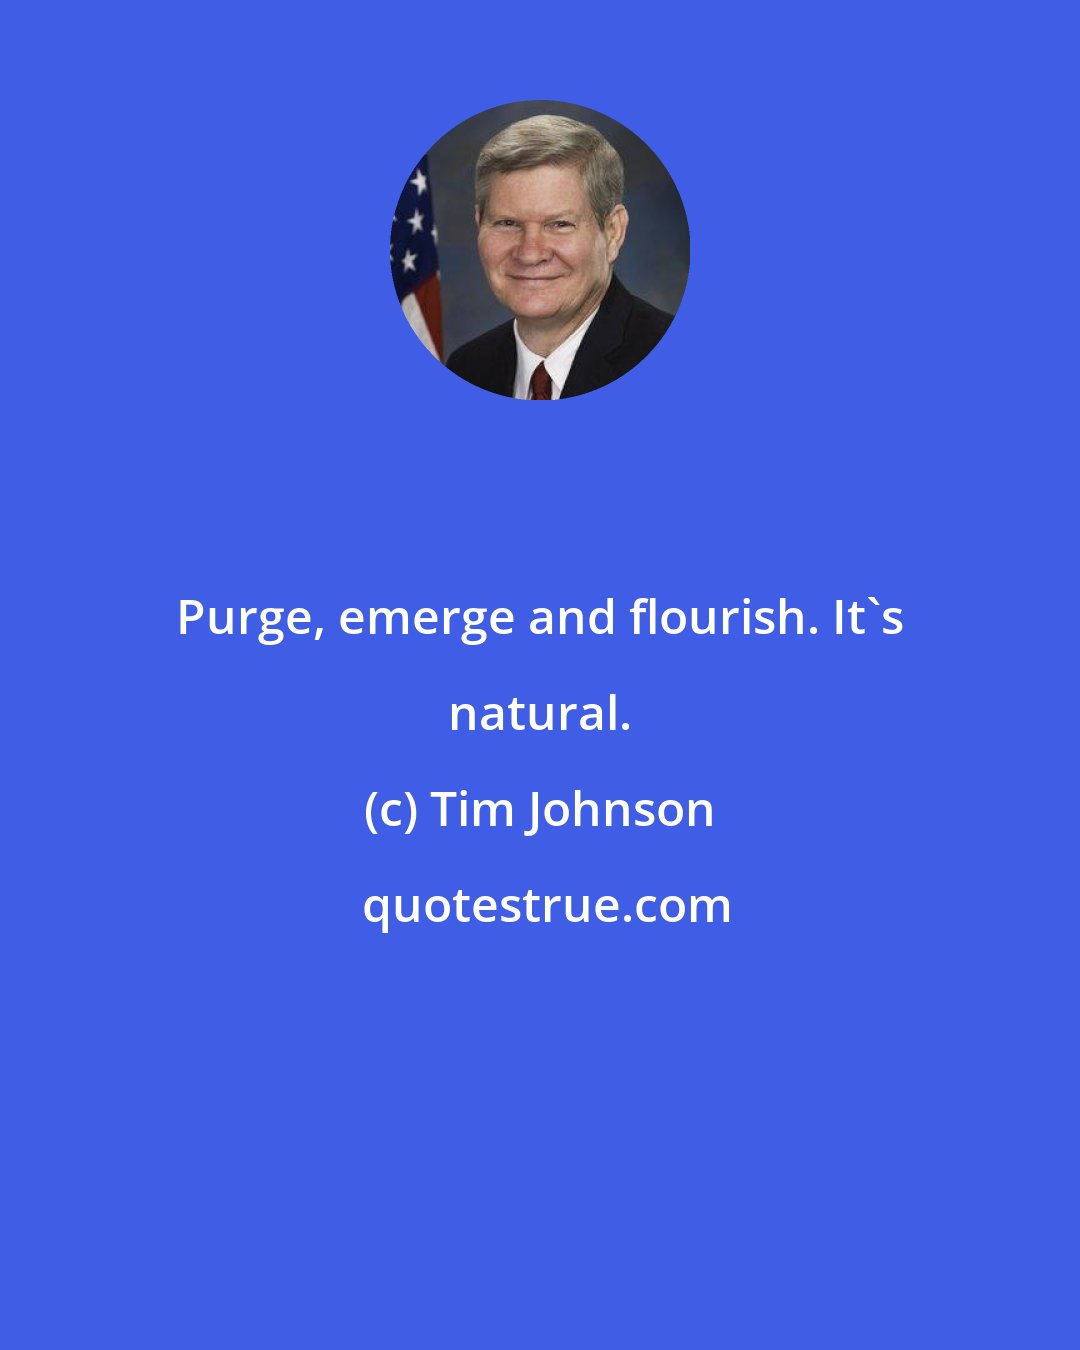 Tim Johnson: Purge, emerge and flourish. It's natural.